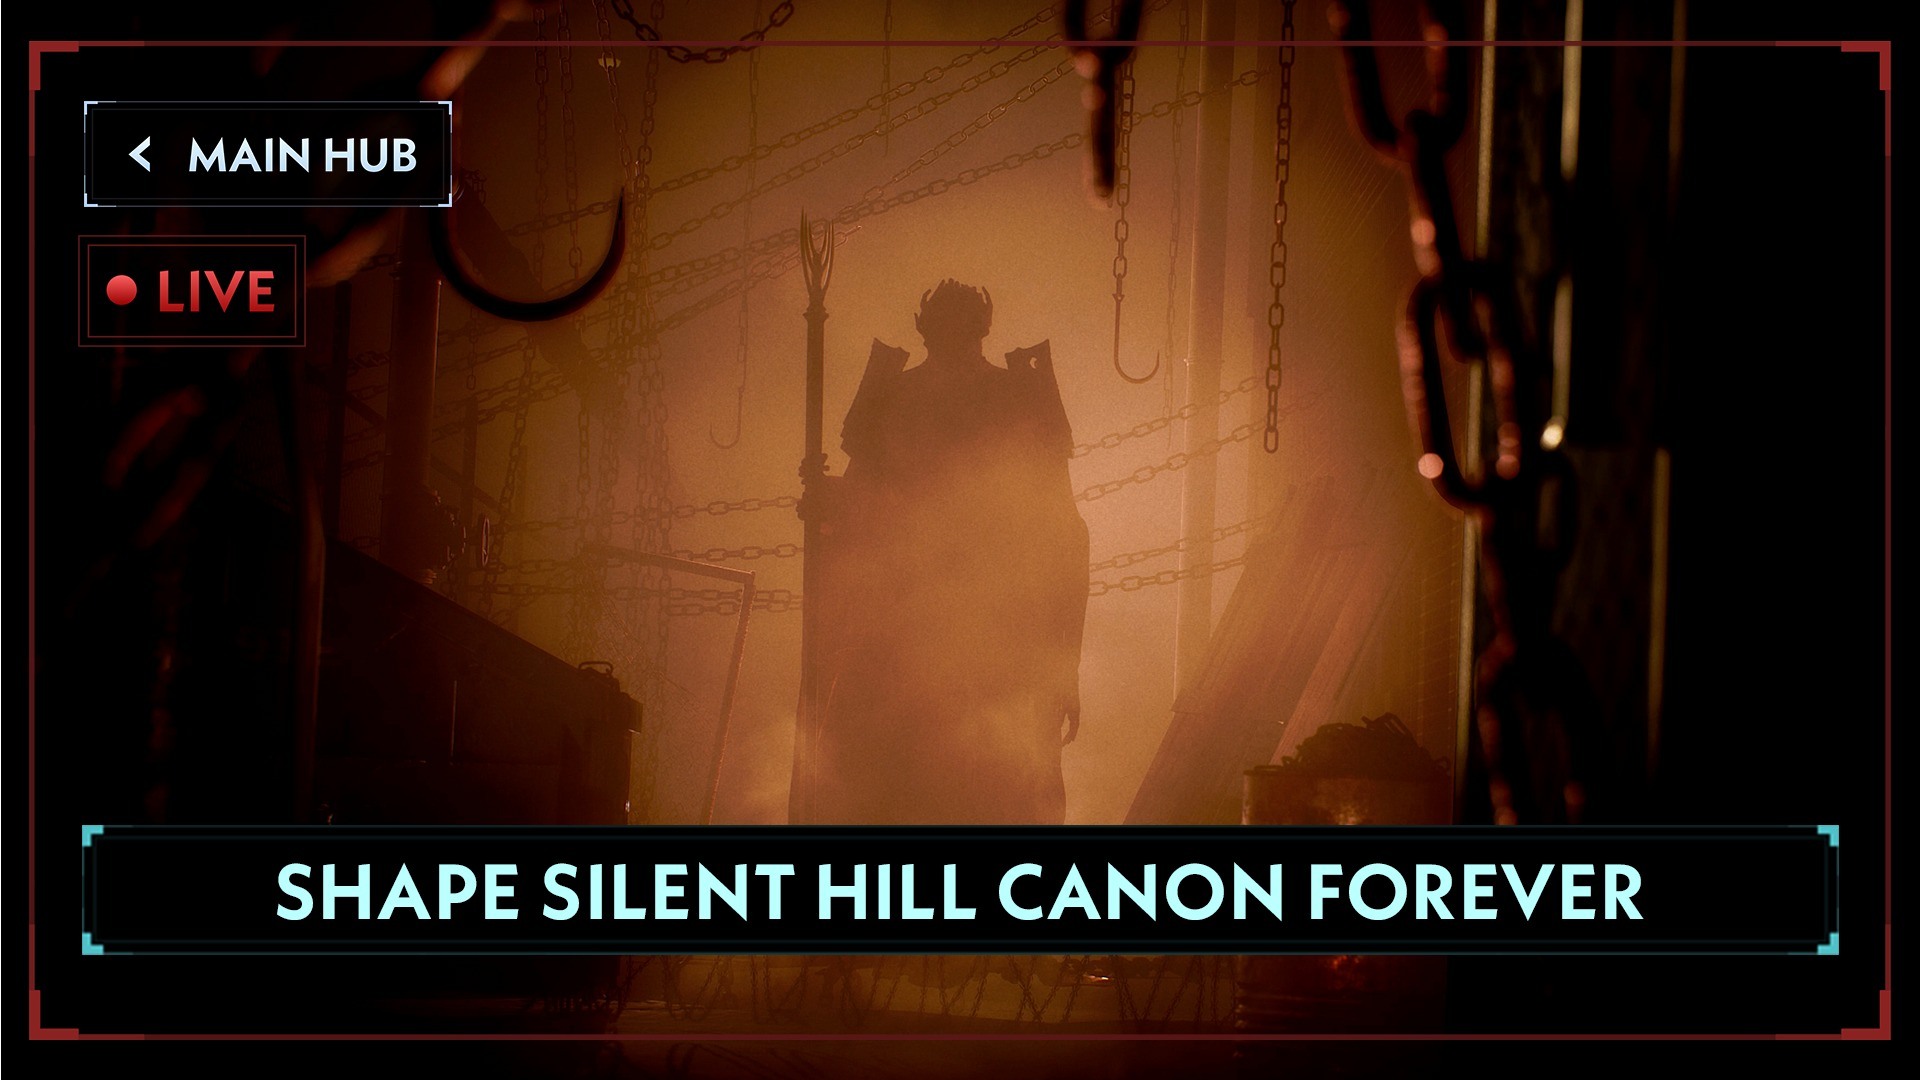 Pre-registration opens for Silent Hill Ascension